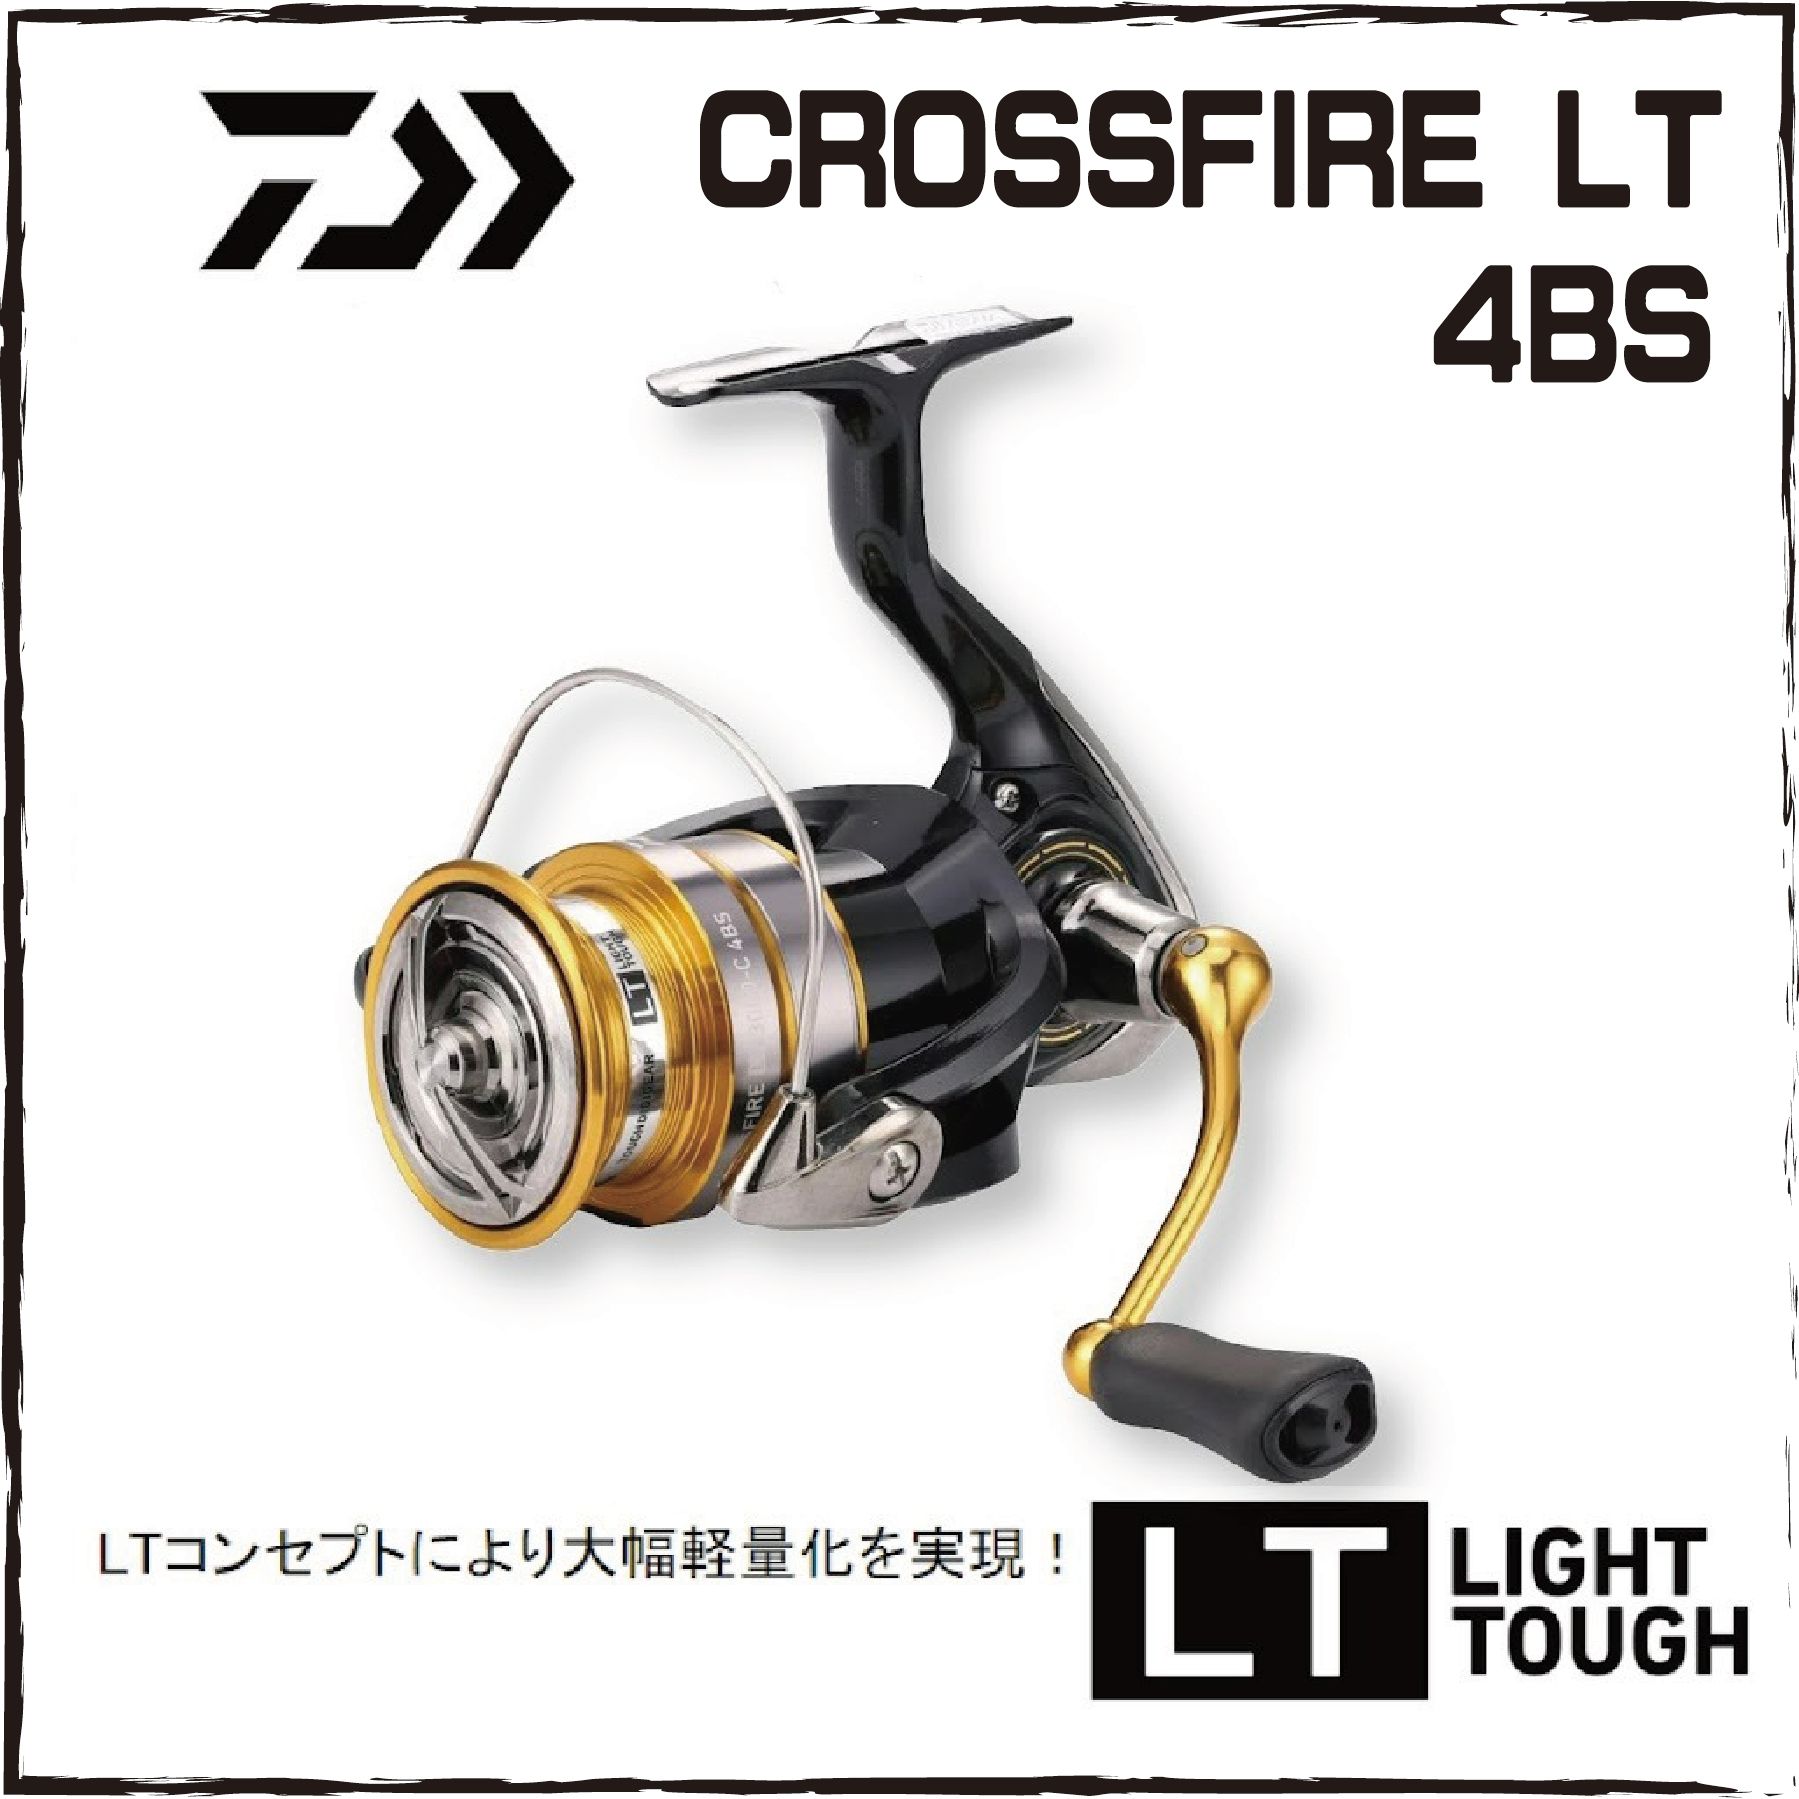 Crossfire LT 4BS